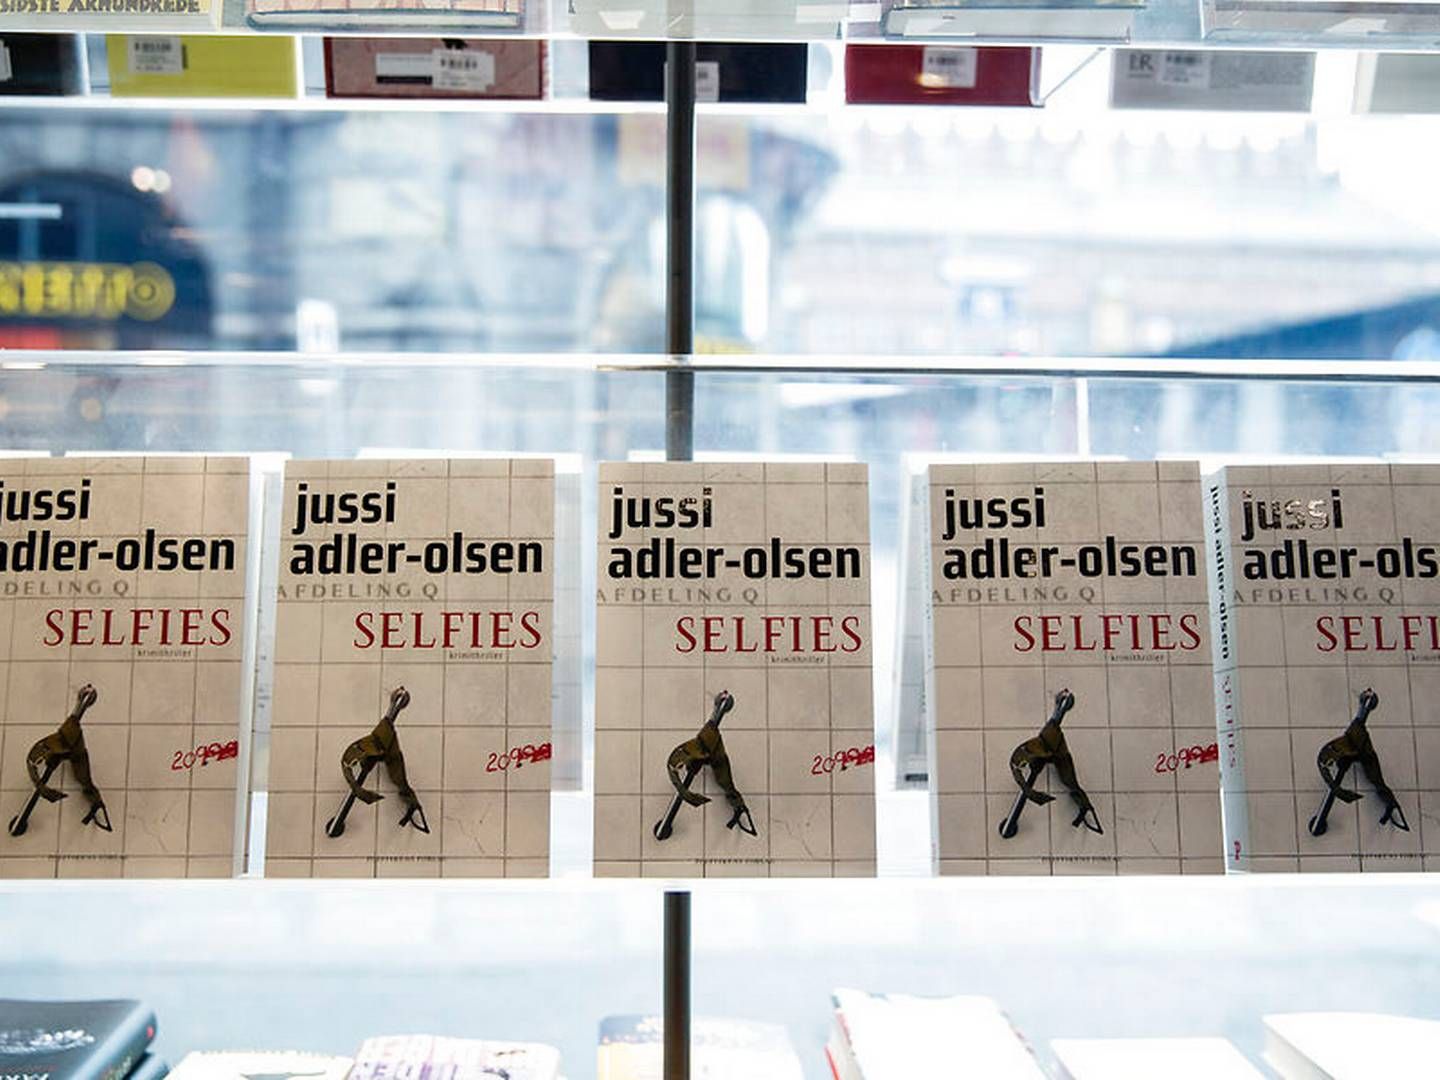 Jussi Adler-Olsens seneste roman "Selfies" udkom i 2016. | Foto: Melissa Kühn Hjerrild/Politiken/Ritzau Scanpix